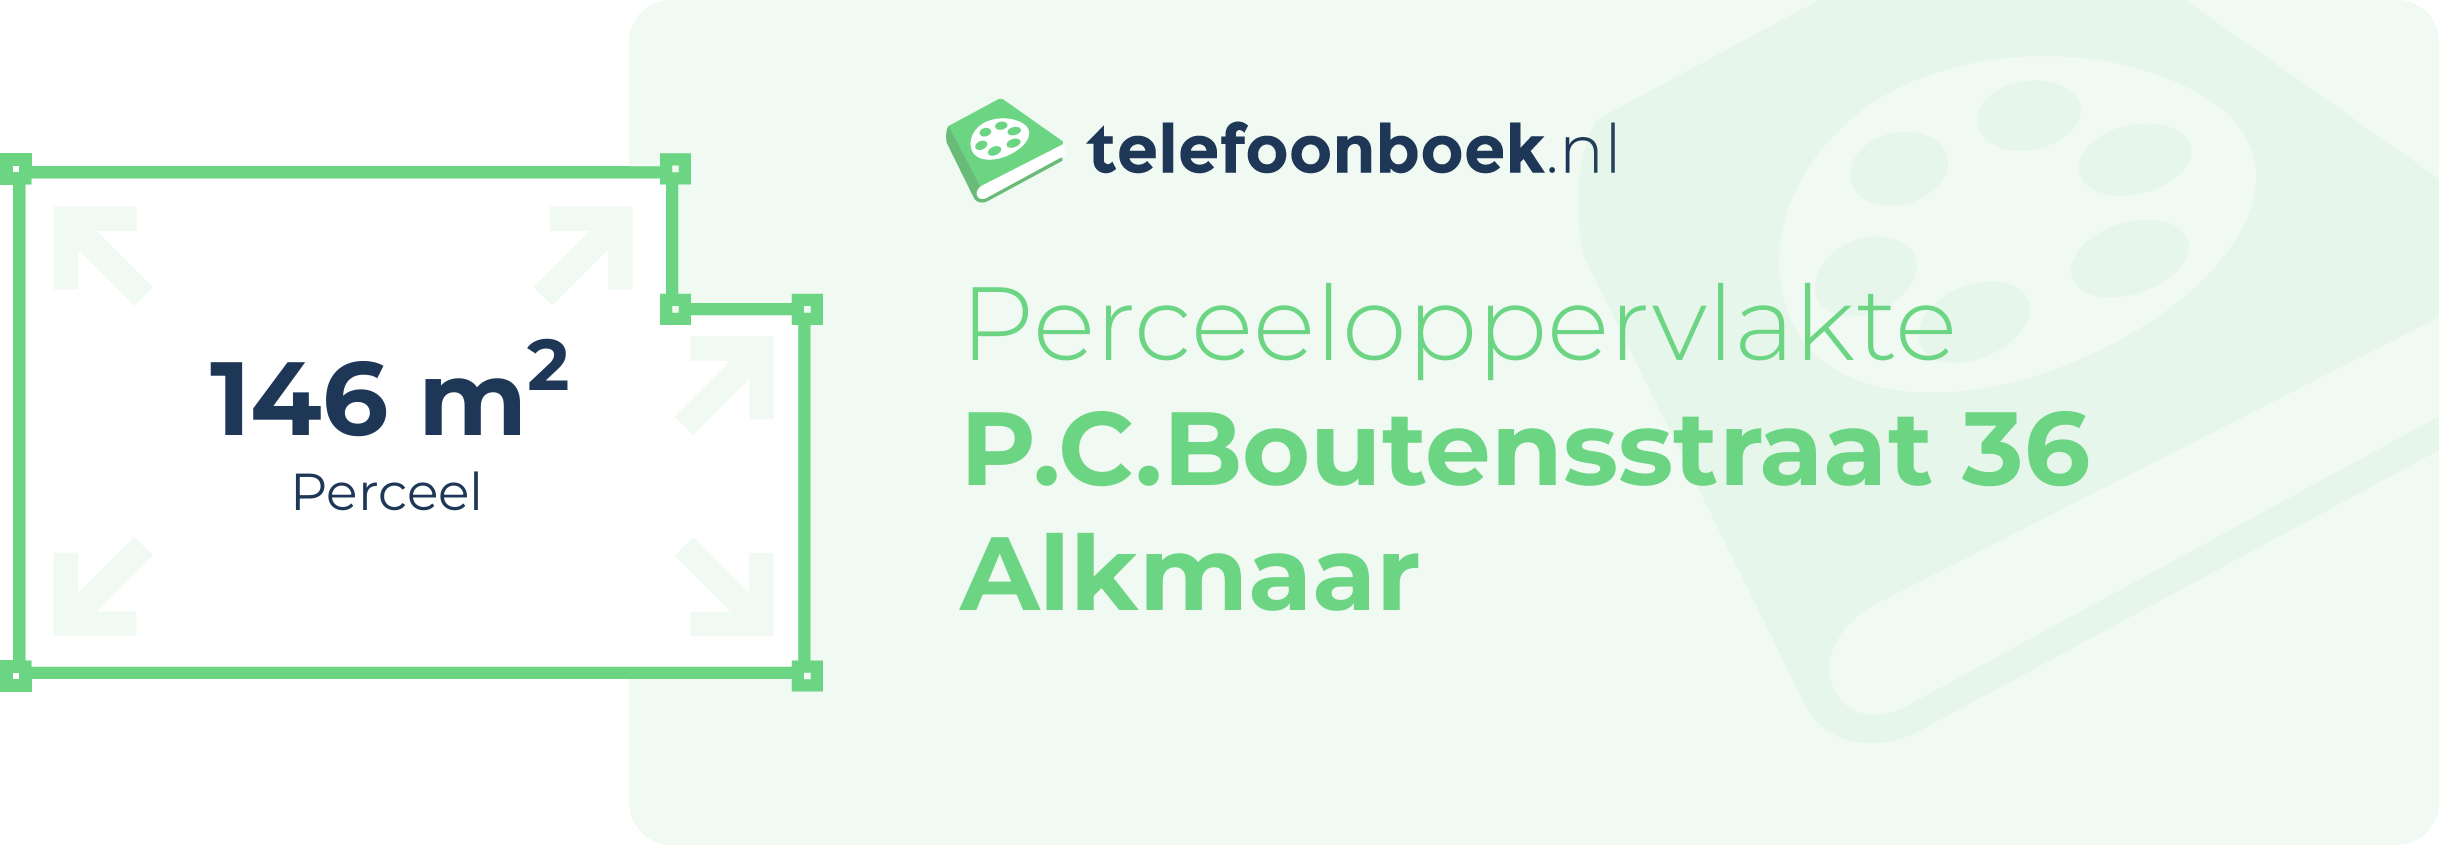 Perceeloppervlakte P.C.Boutensstraat 36 Alkmaar